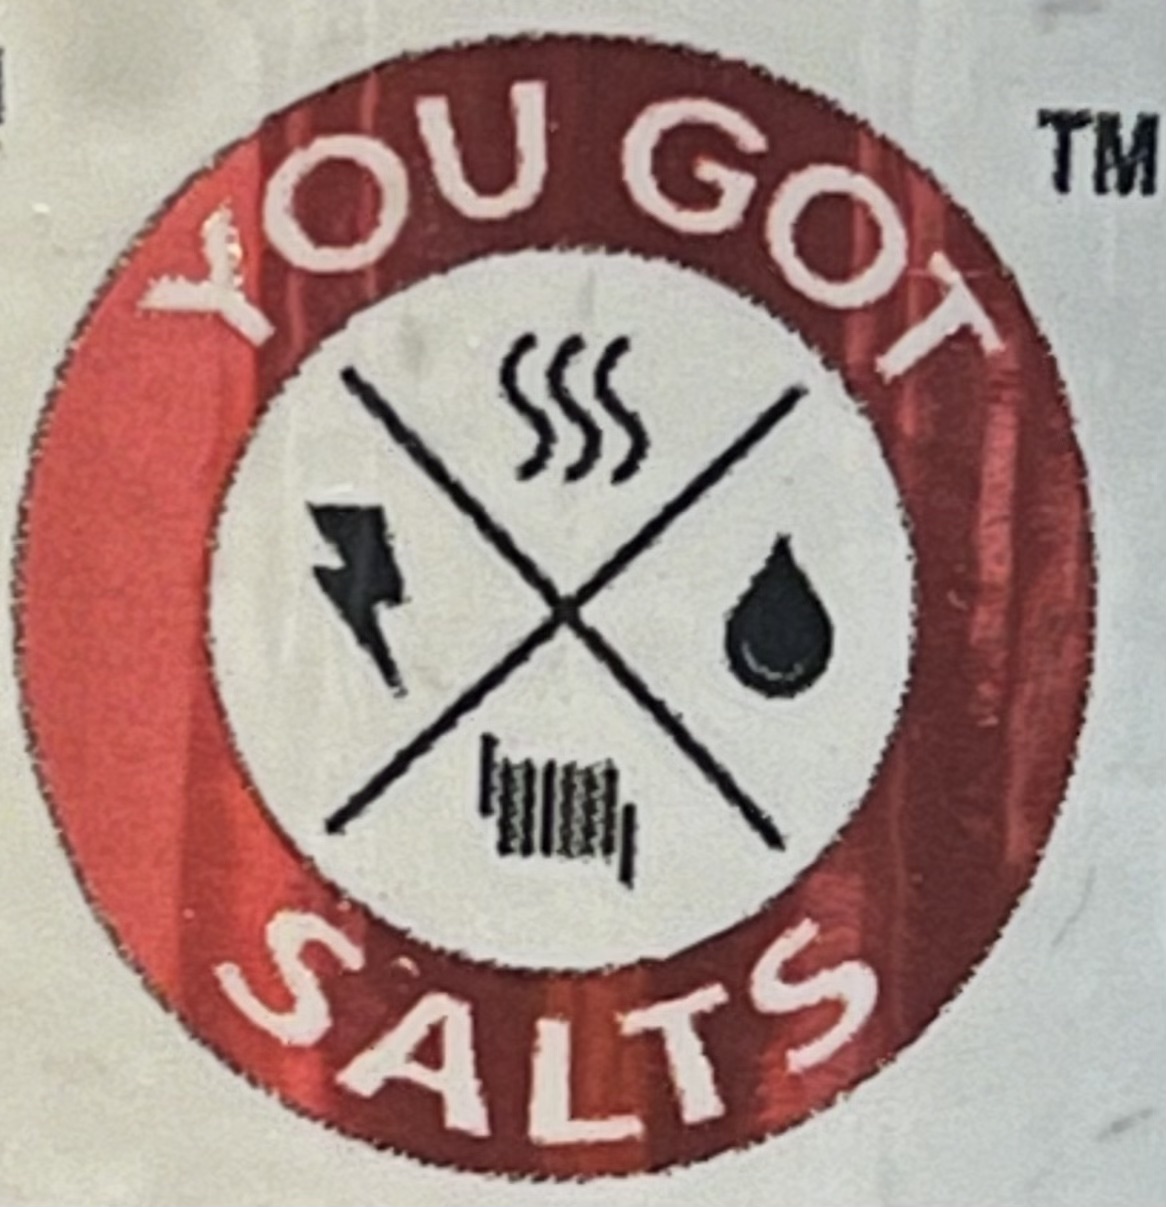 You Got Salts